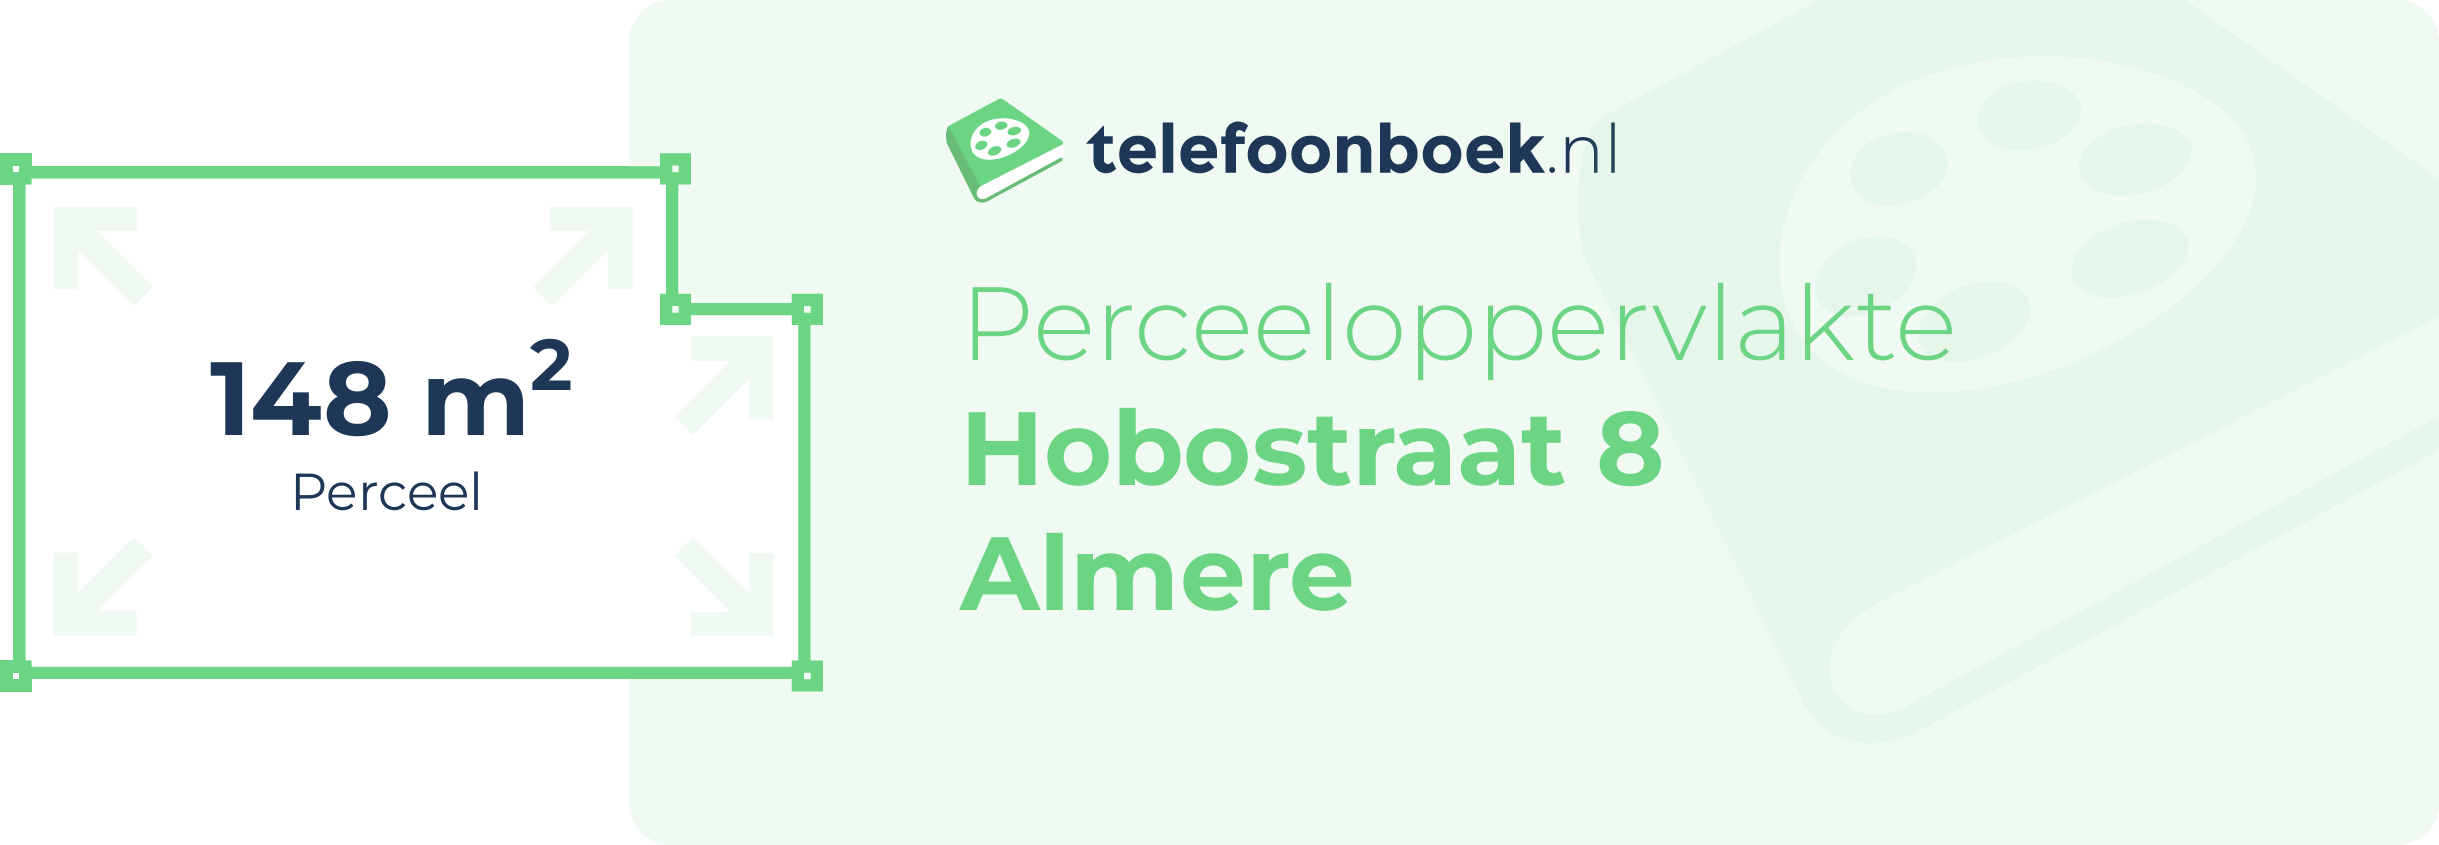 Perceeloppervlakte Hobostraat 8 Almere